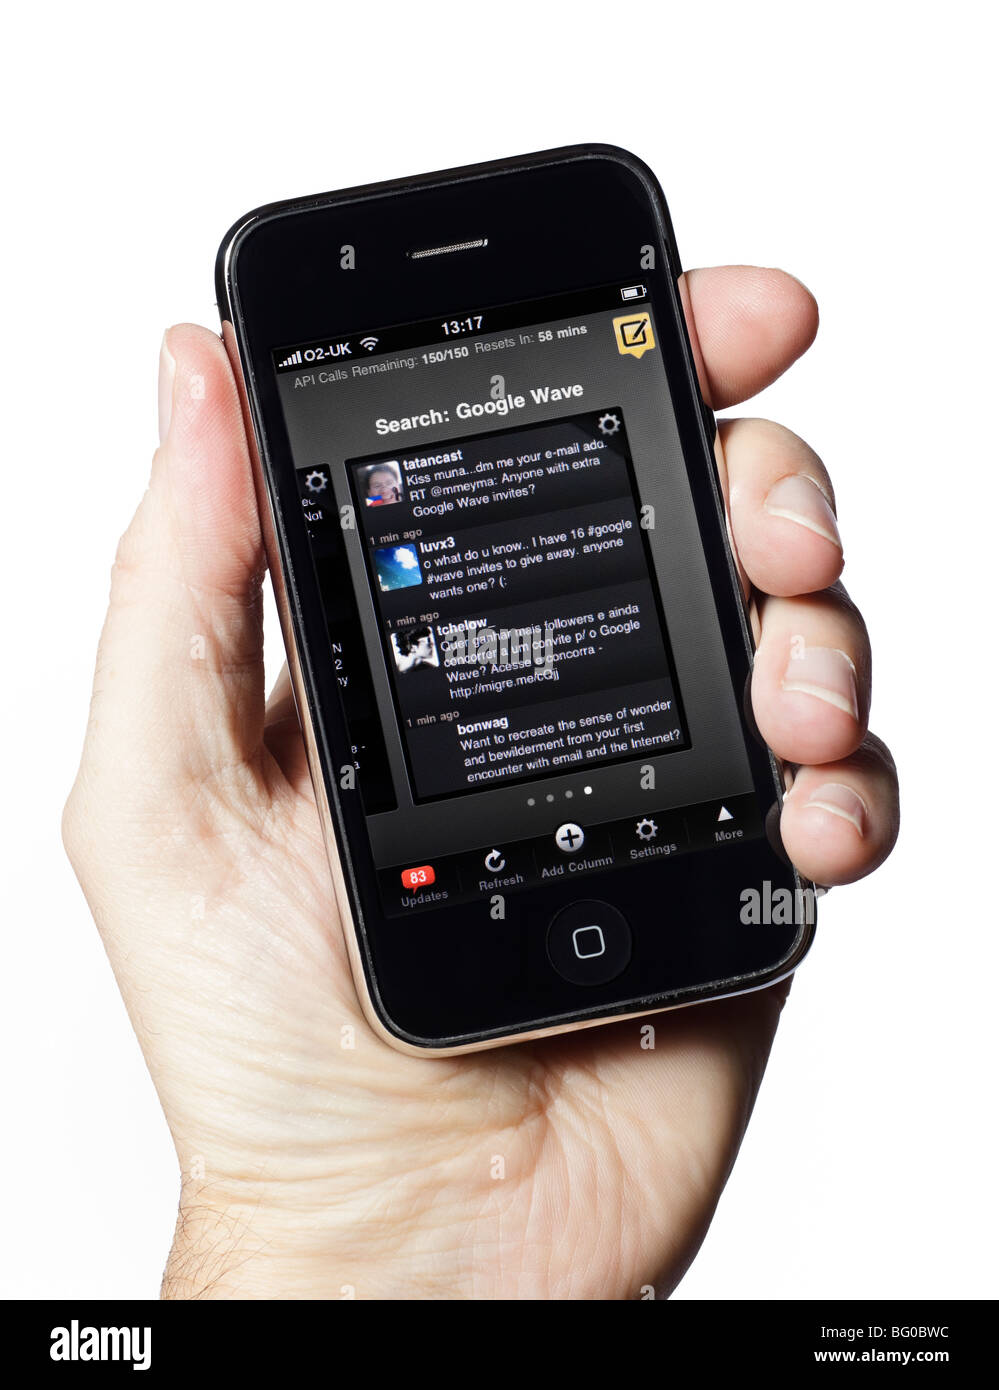 Male hand holding iPhone using Tweetdeck Twitter application Stock Photo